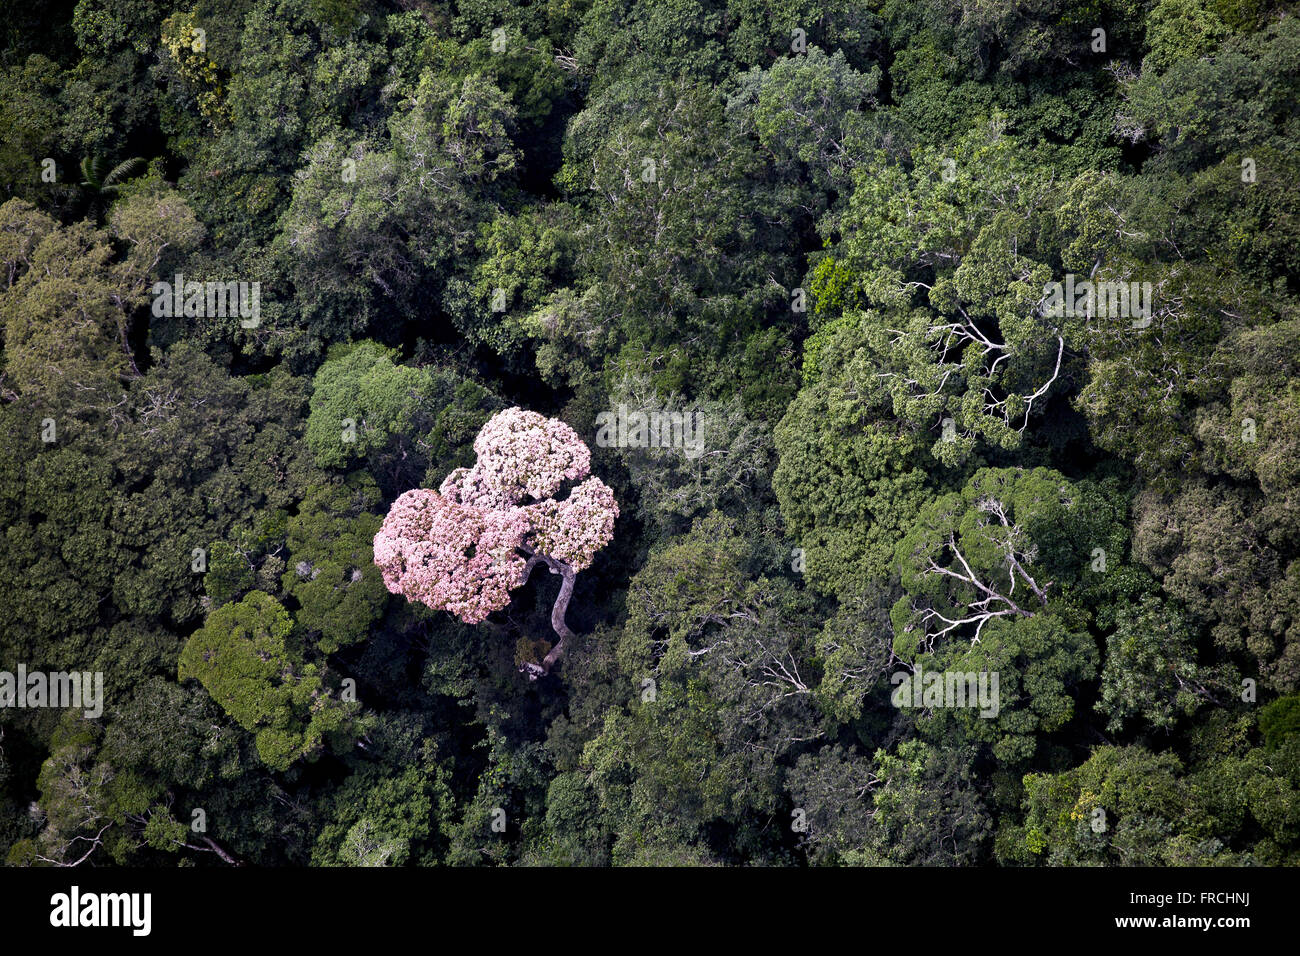 Luftaufnahme des Amazonas-Regenwaldes im Tumucumaque Mountains National Park Stockfoto